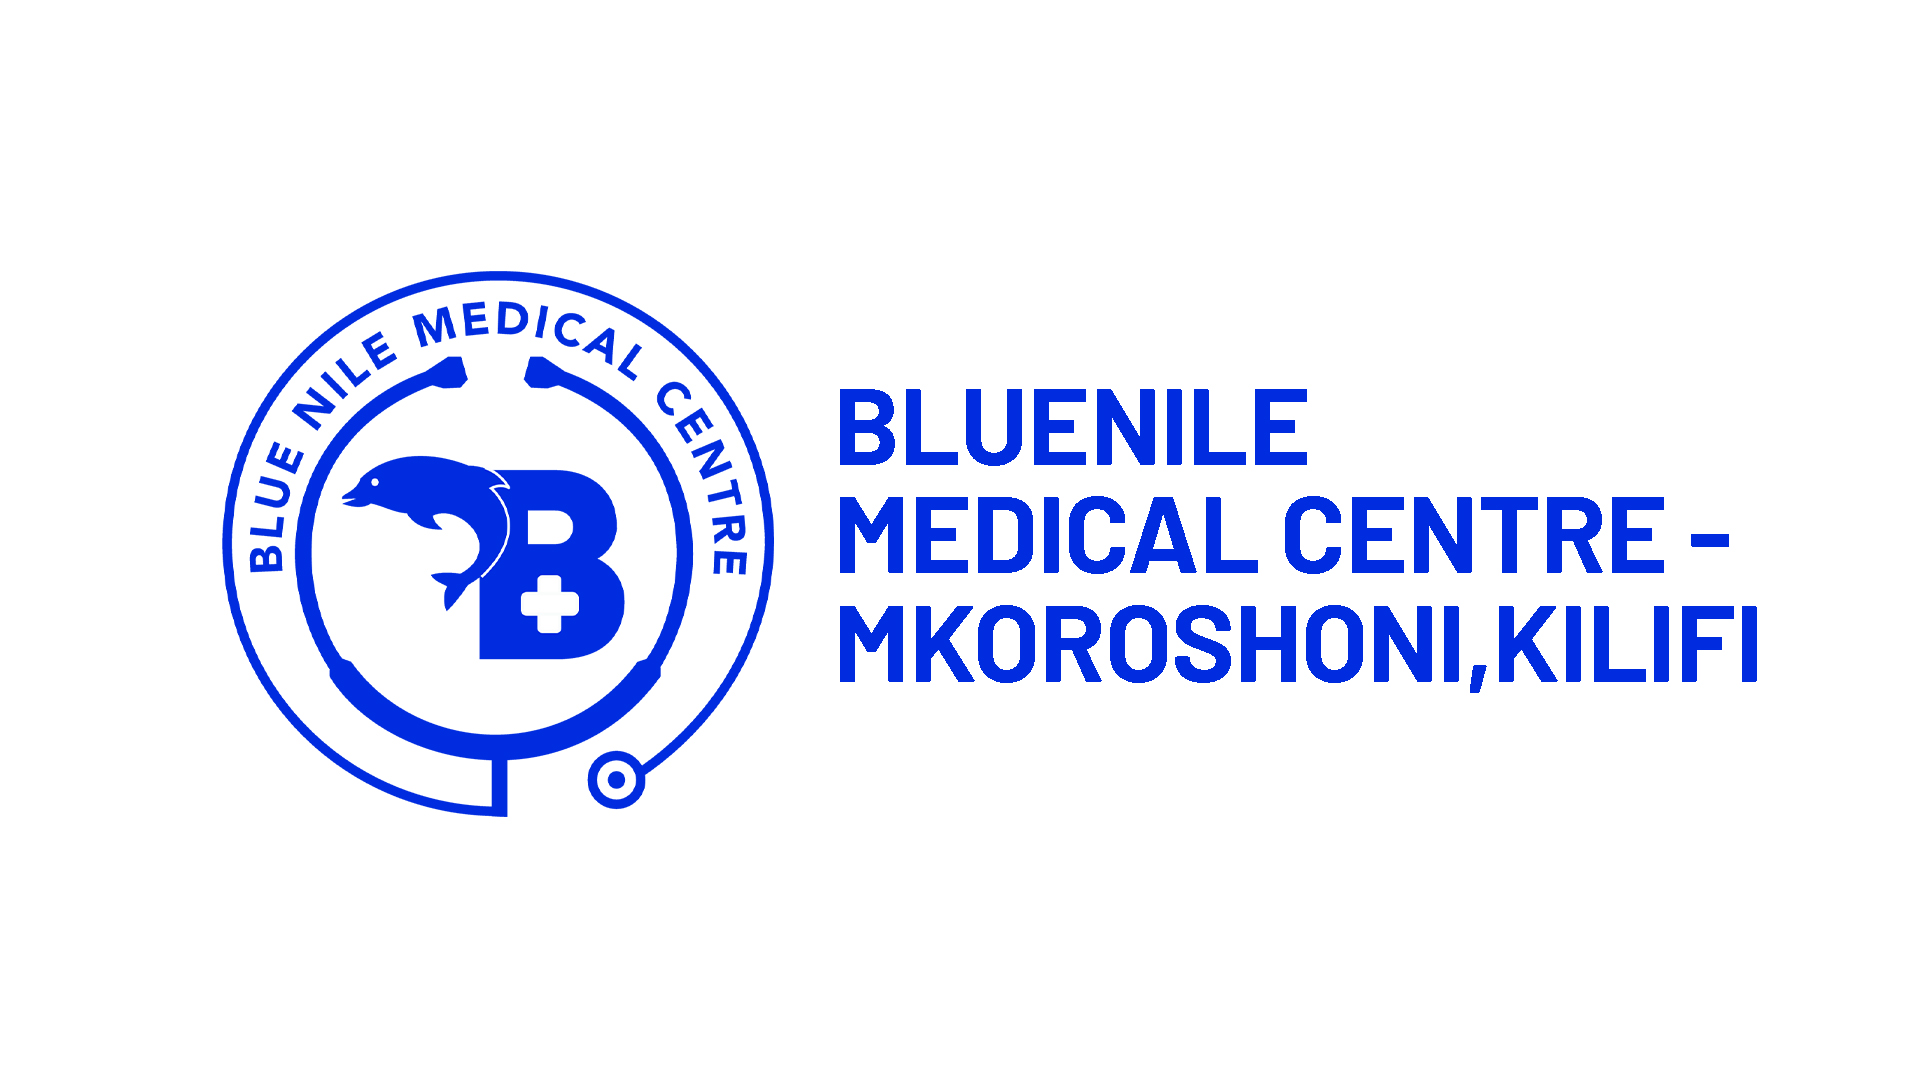 Bluenile logo name